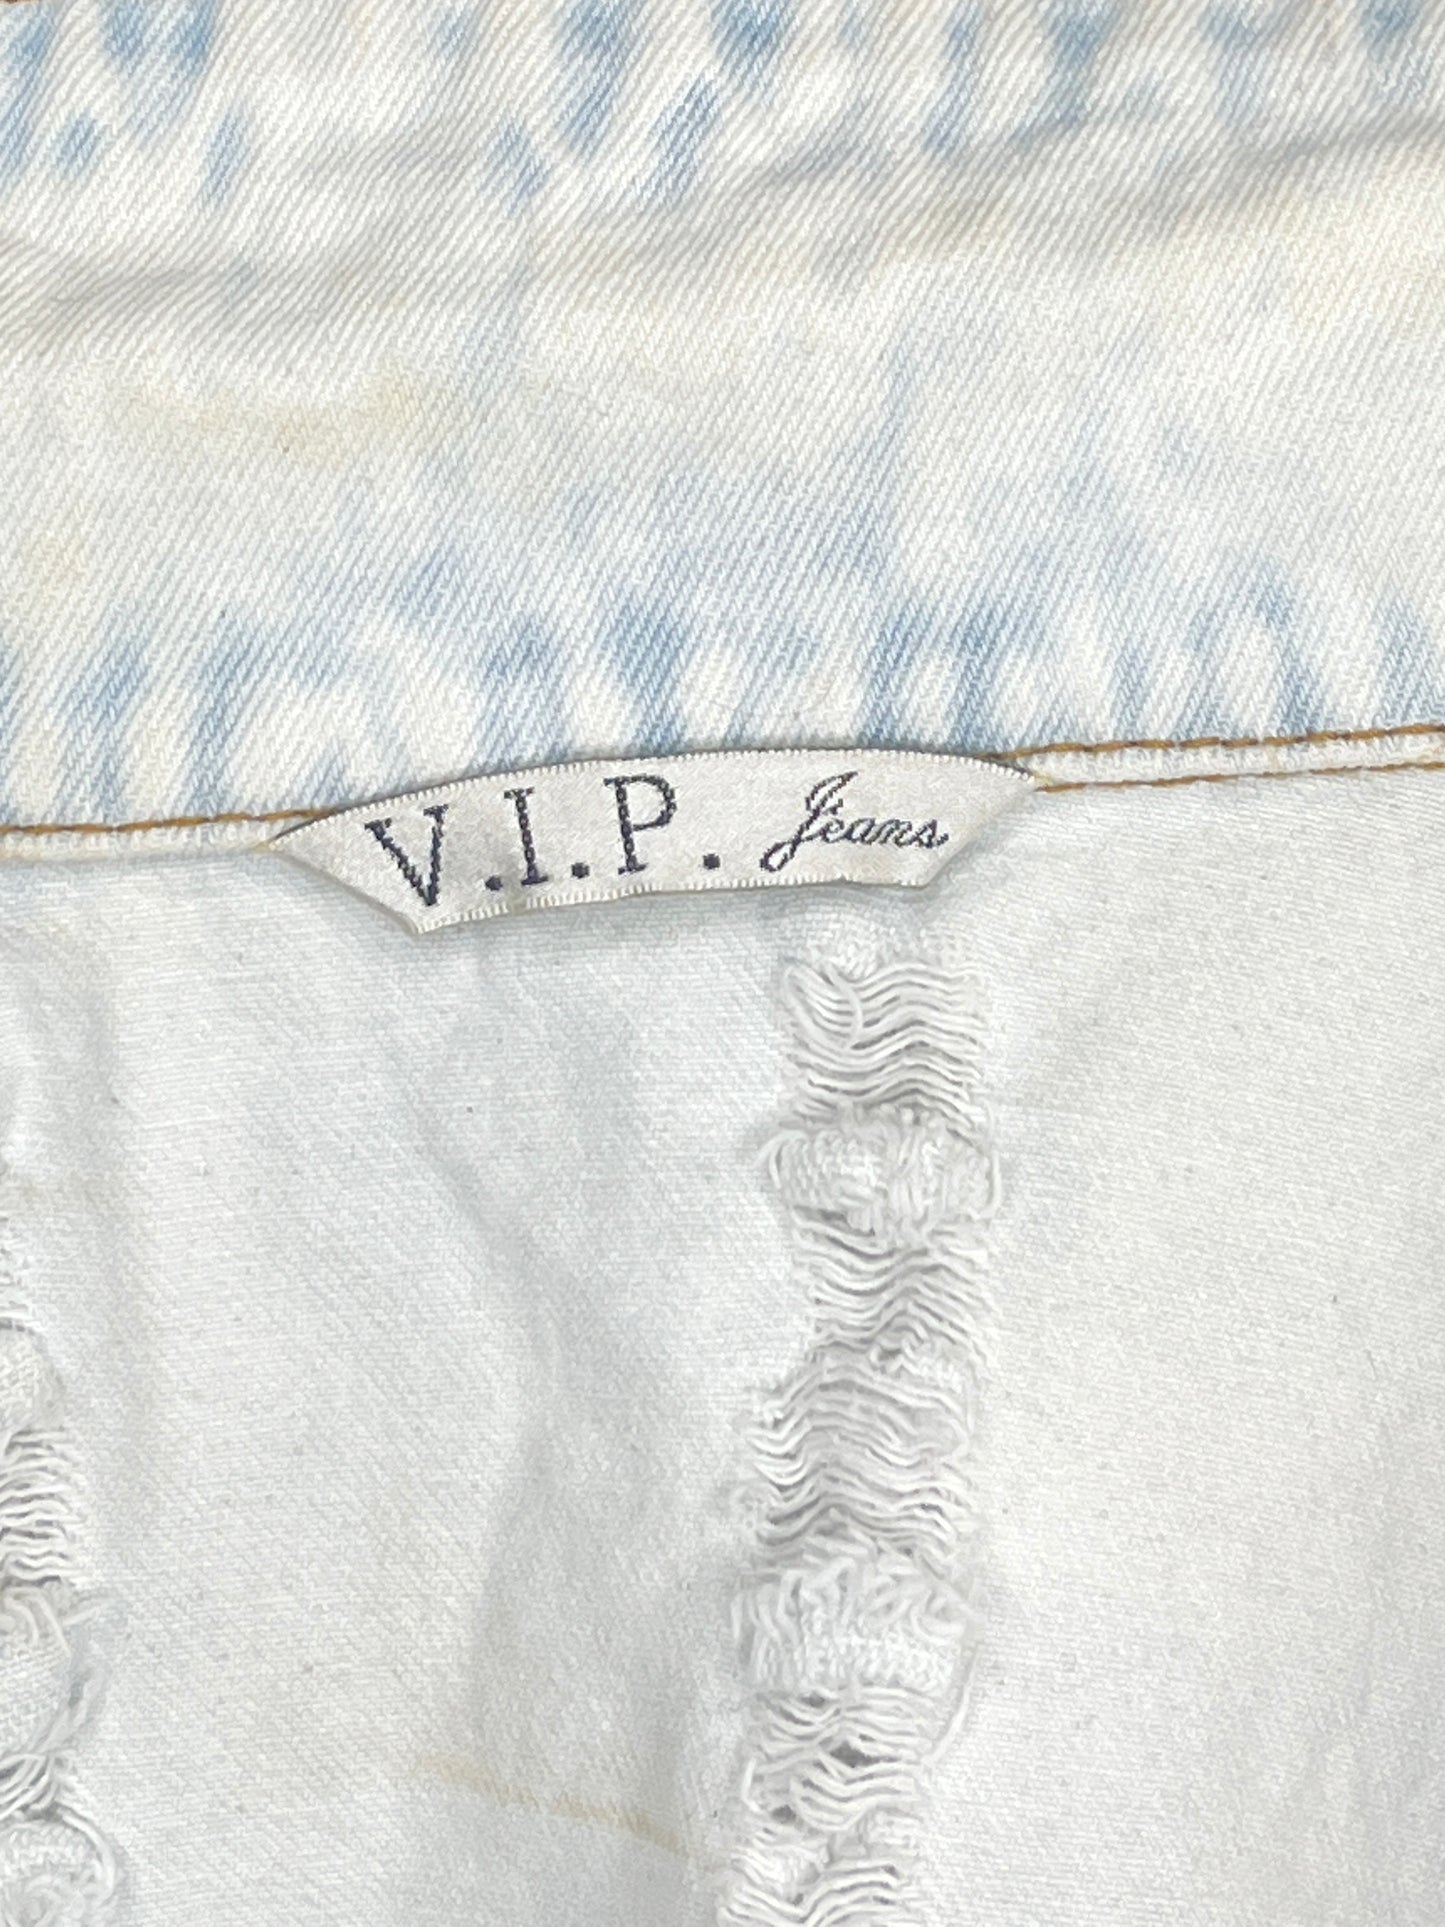 VIP Jeans Vest Denim Light Blue, White Size XL SKU 000045